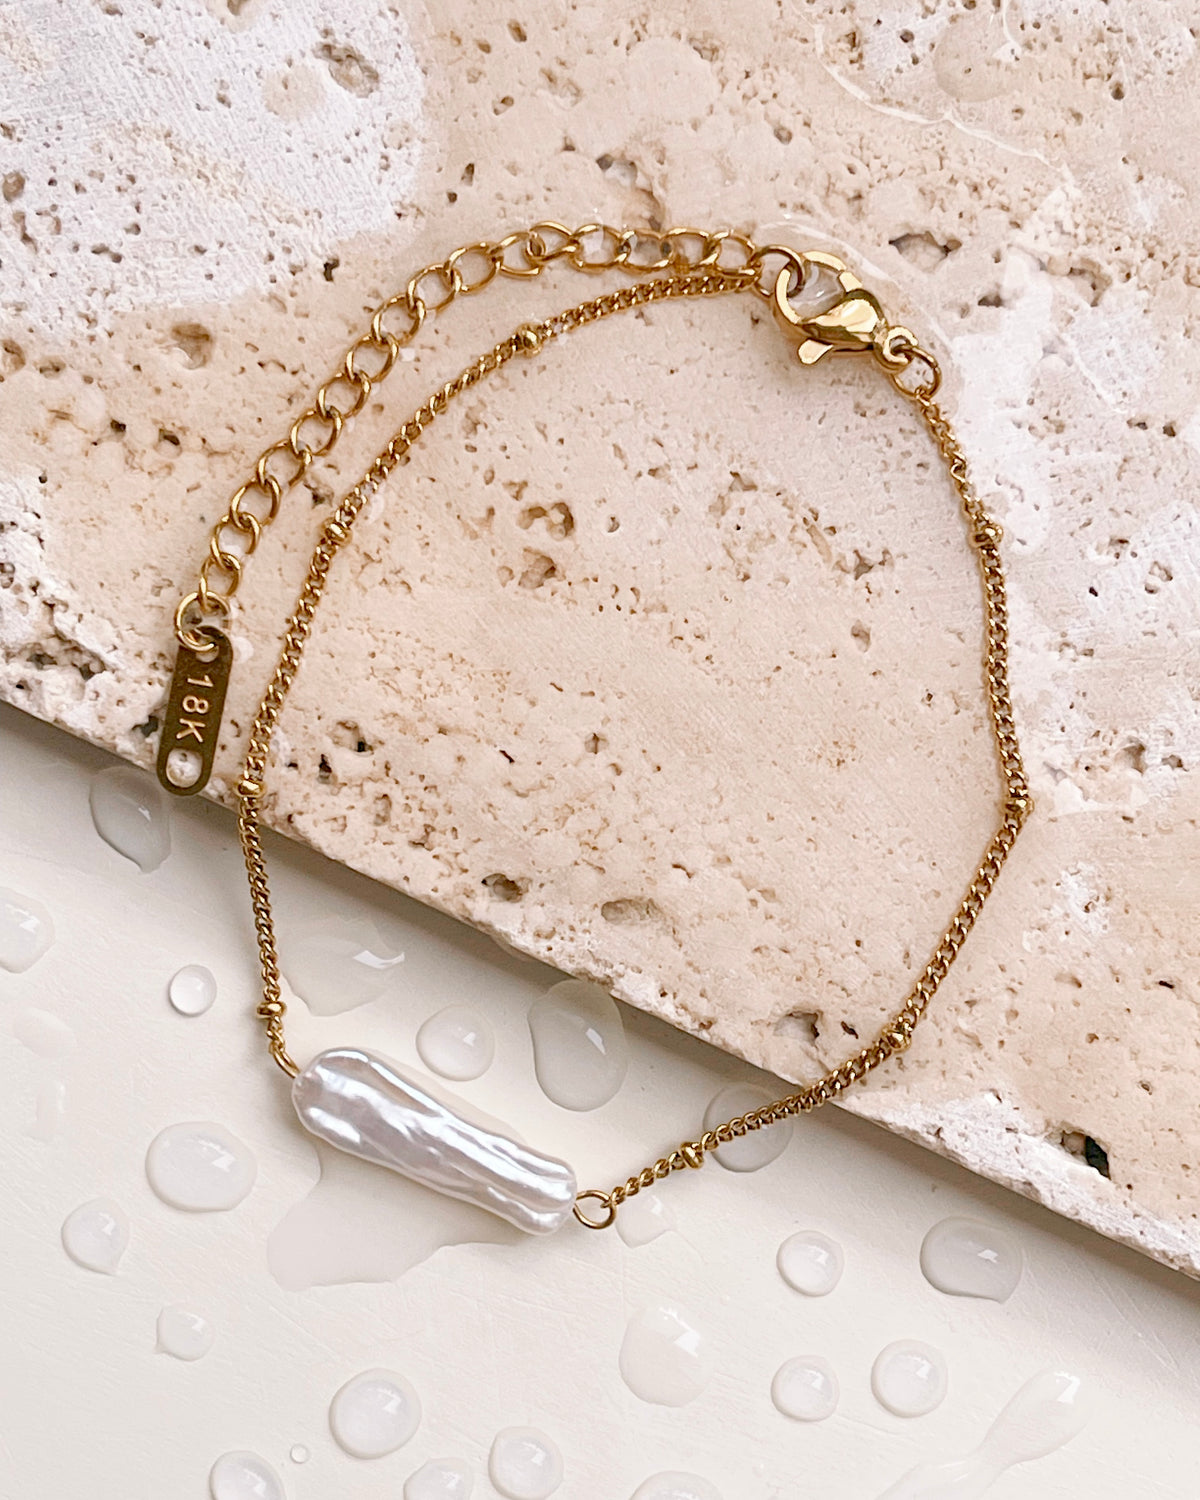 Olive Elongated Baroque Freshwater Pearl Pendant Beaded Chain Gold Bracelet